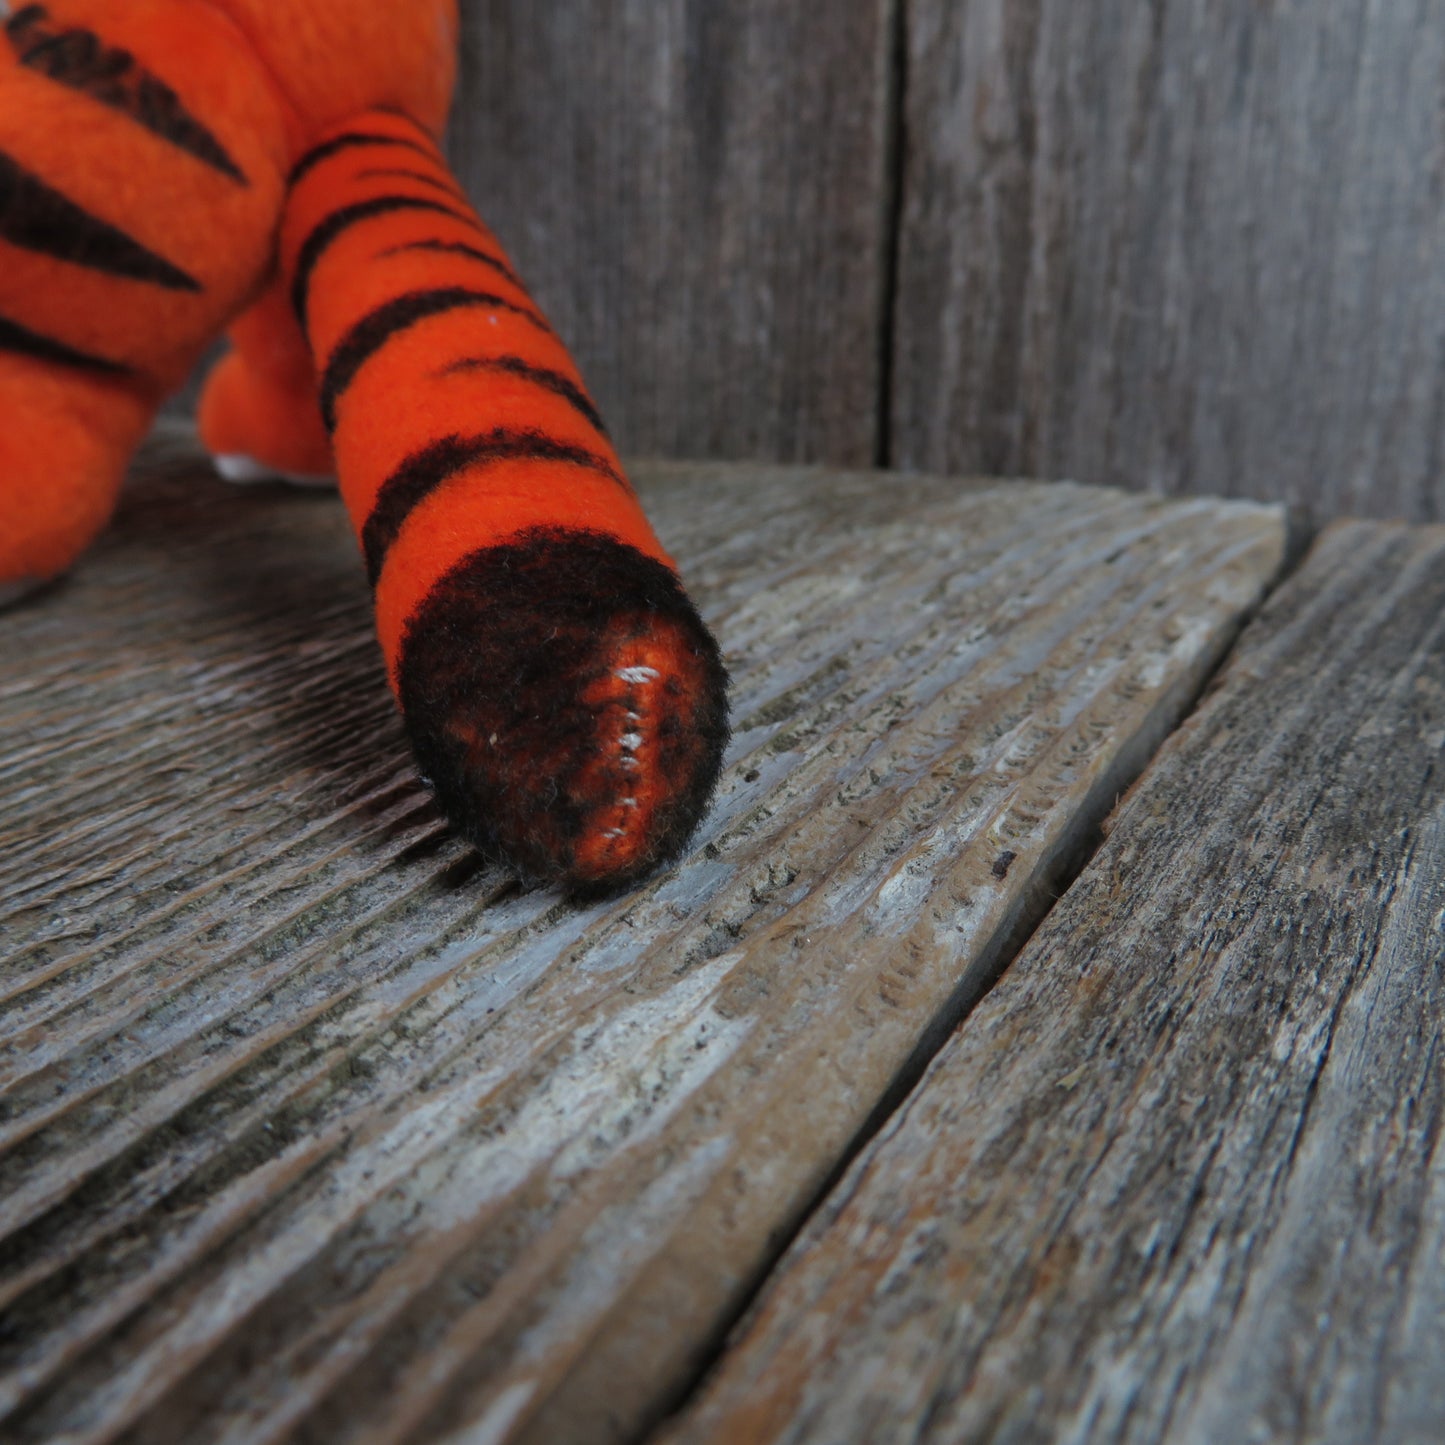 Vintage Tony the Tiger Plush Kellogg's Frosted Flakes Mascot Jointed Stuffed Animal Orange Black 1997 - At Grandma's Table